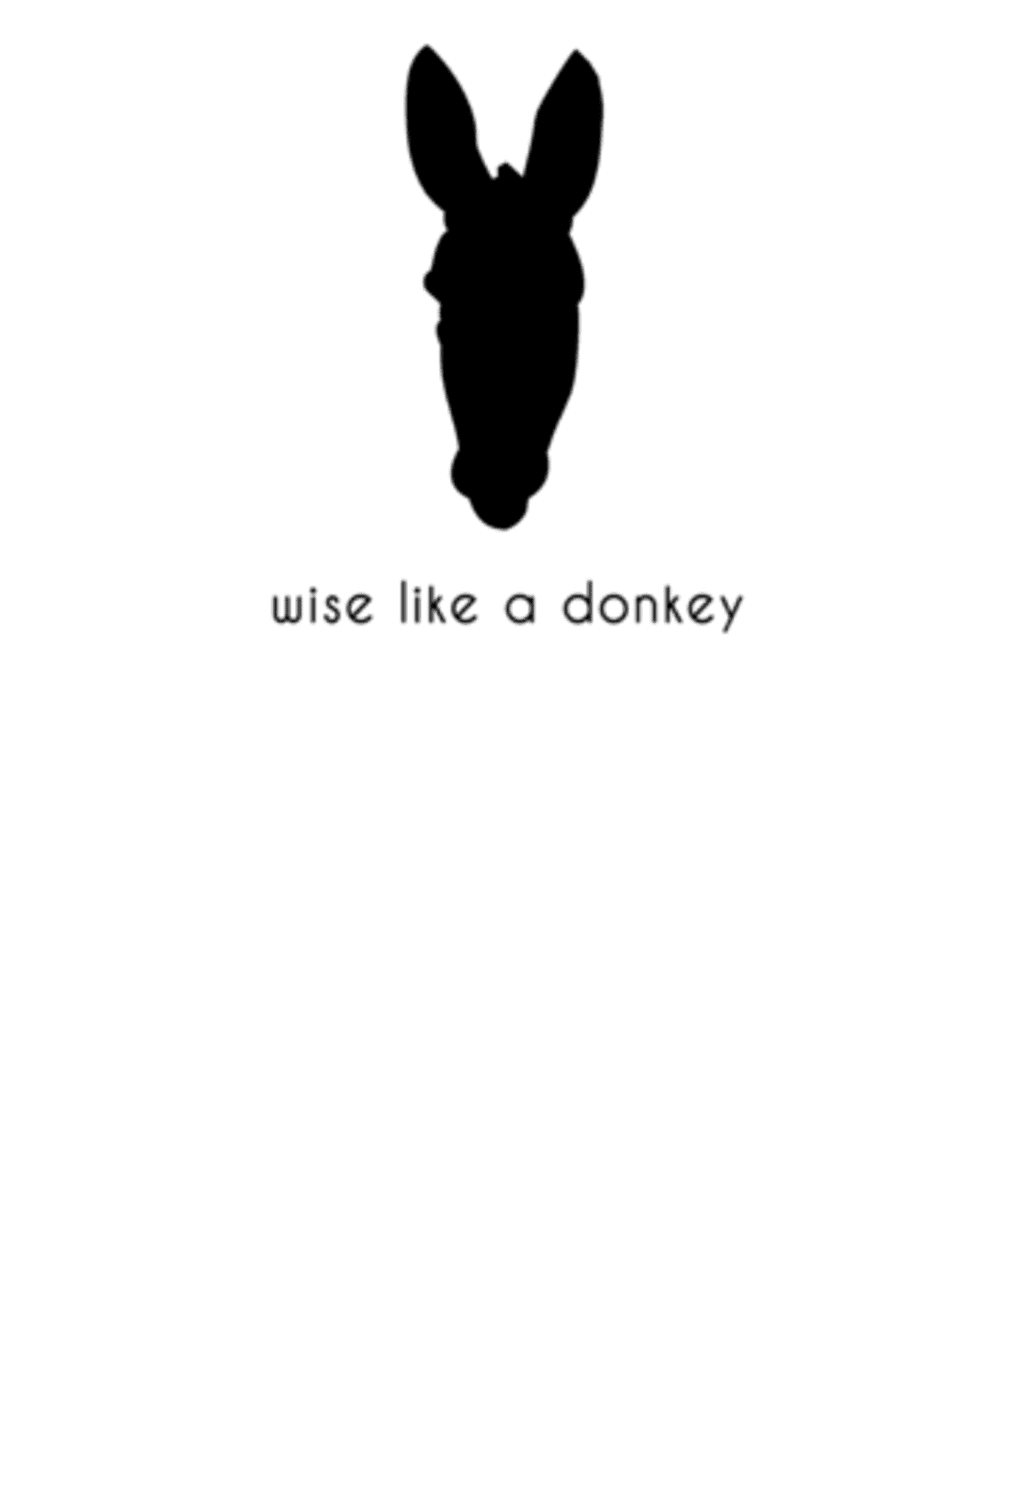 wise like a donkey